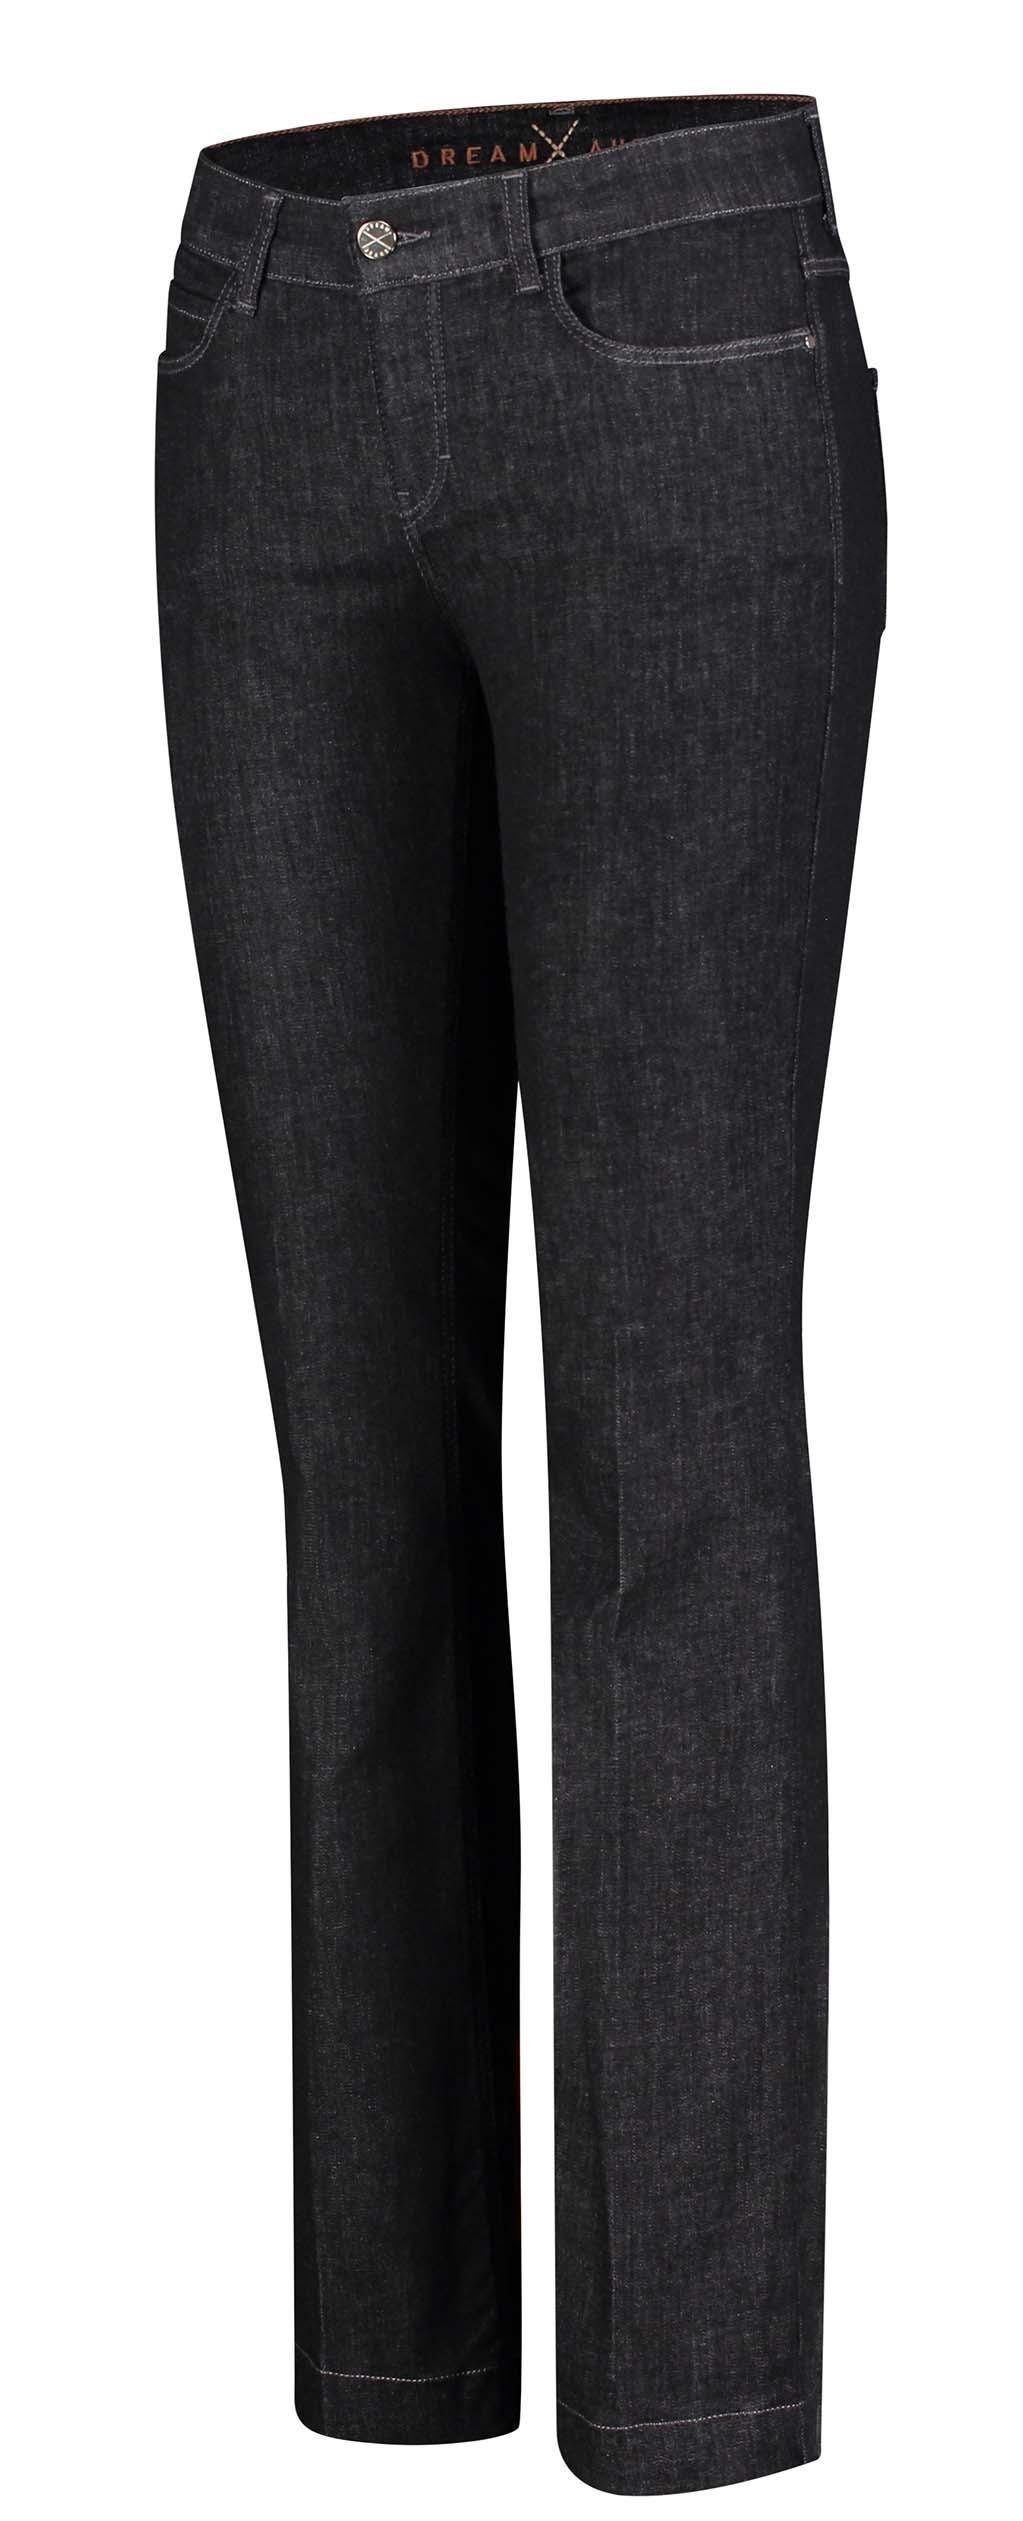 D944 DREAM MAC Stretch-Jeans rinsed black MAC BOOT 5429-90-0357 fashion